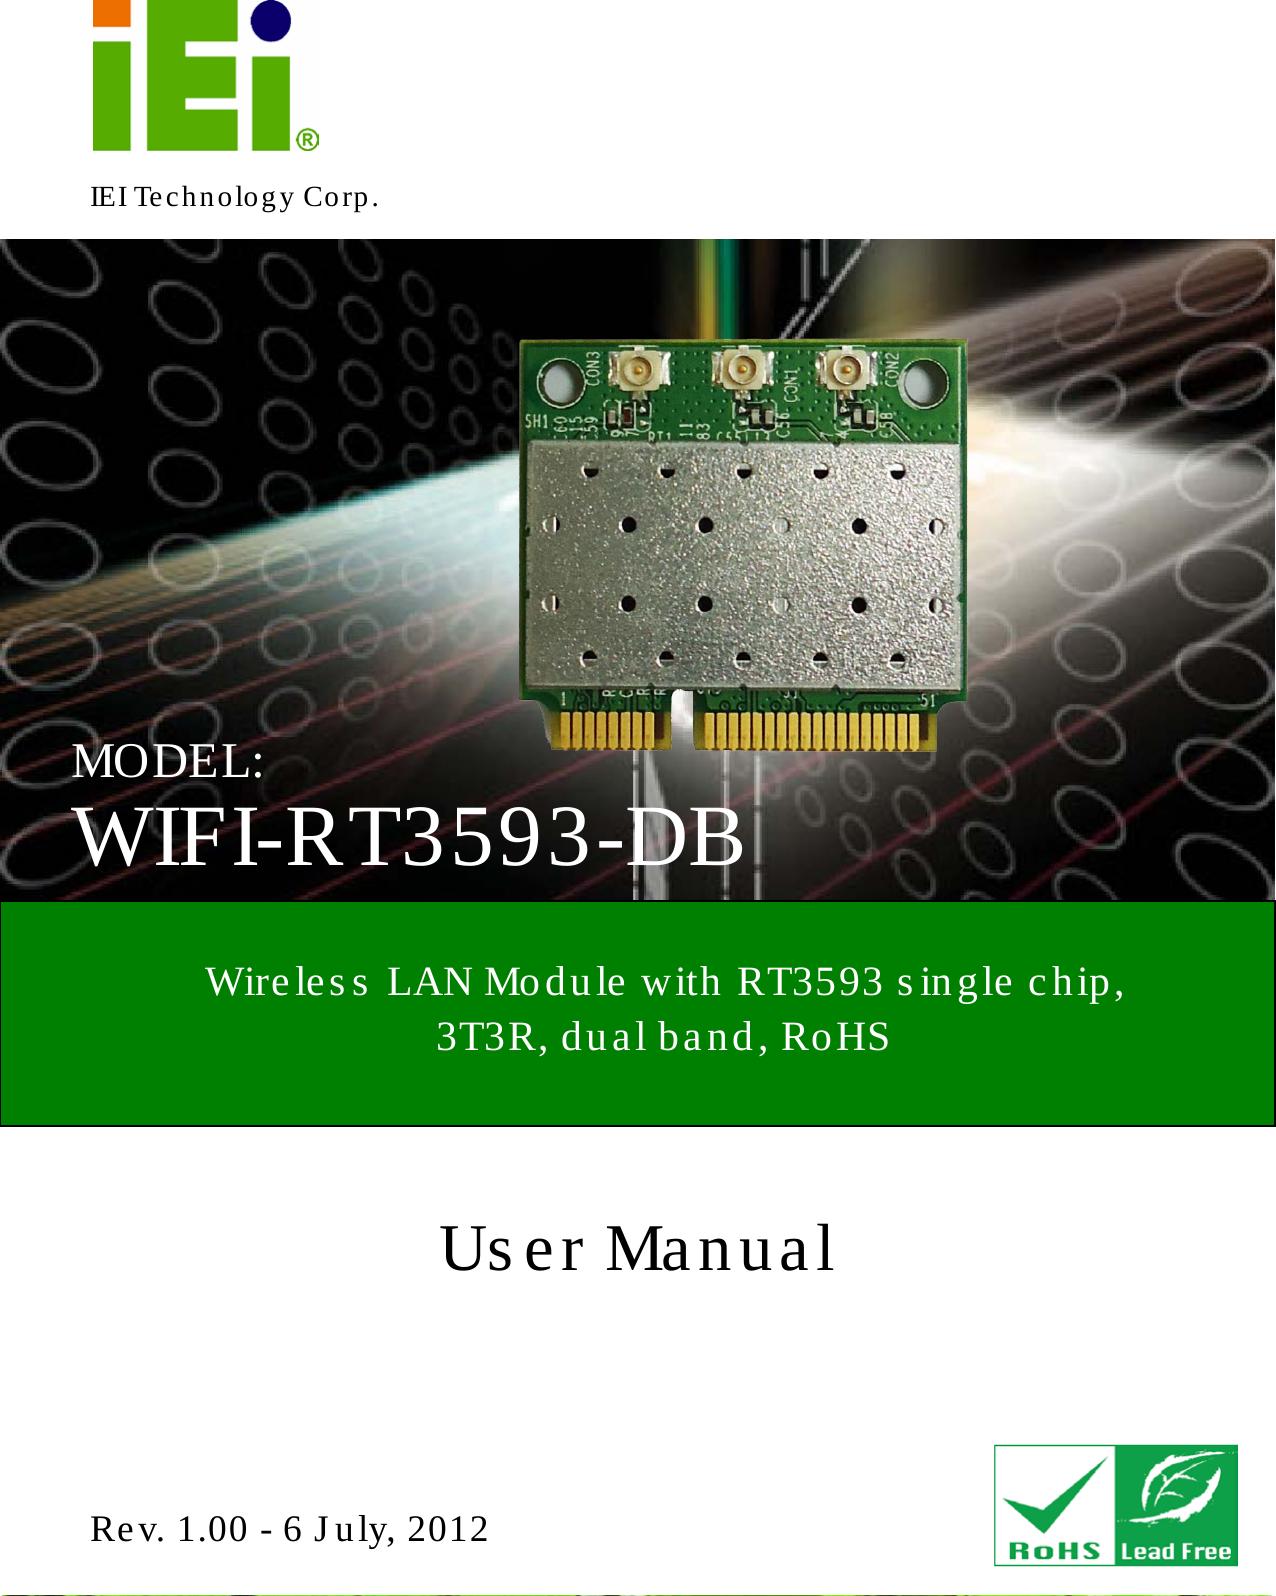   WIFI-RT3593-DB Page 1 IEI Technology Corp. User Manual  WIFI-RT3593-DB MODEL: Wireles s  LAN Module with RT3593 single chip,   3T3R, dual band, RoHS Rev. 1.00 - 6 July, 2012  WIFI-RT3593-DB CPU Card 